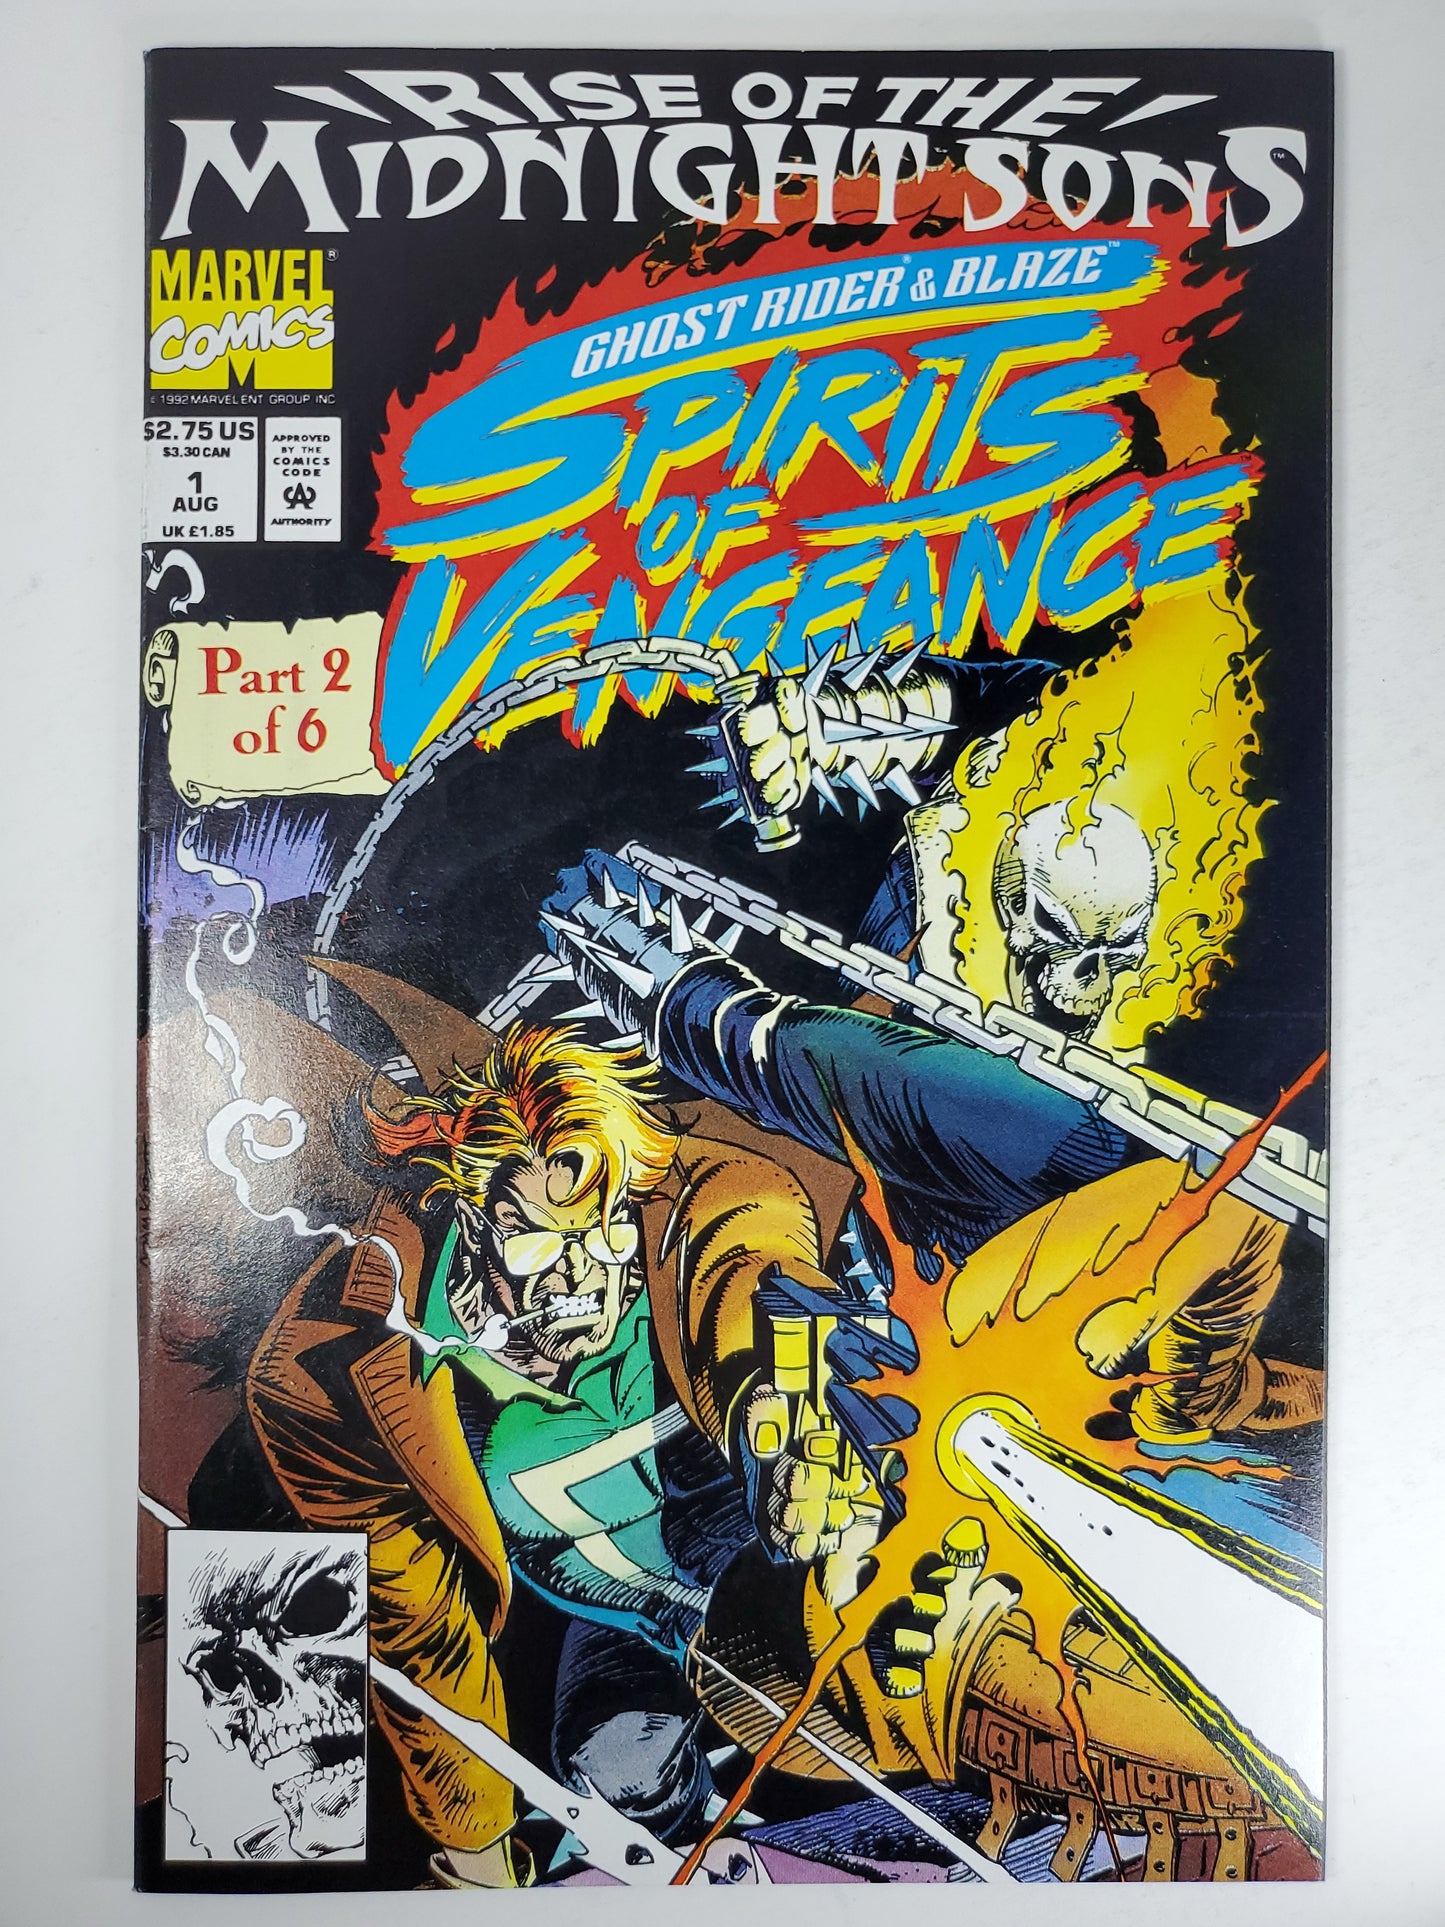 Marvel Ghost Rider/Blaze Spirits of Vengeance Vol 1 #1 (101623)